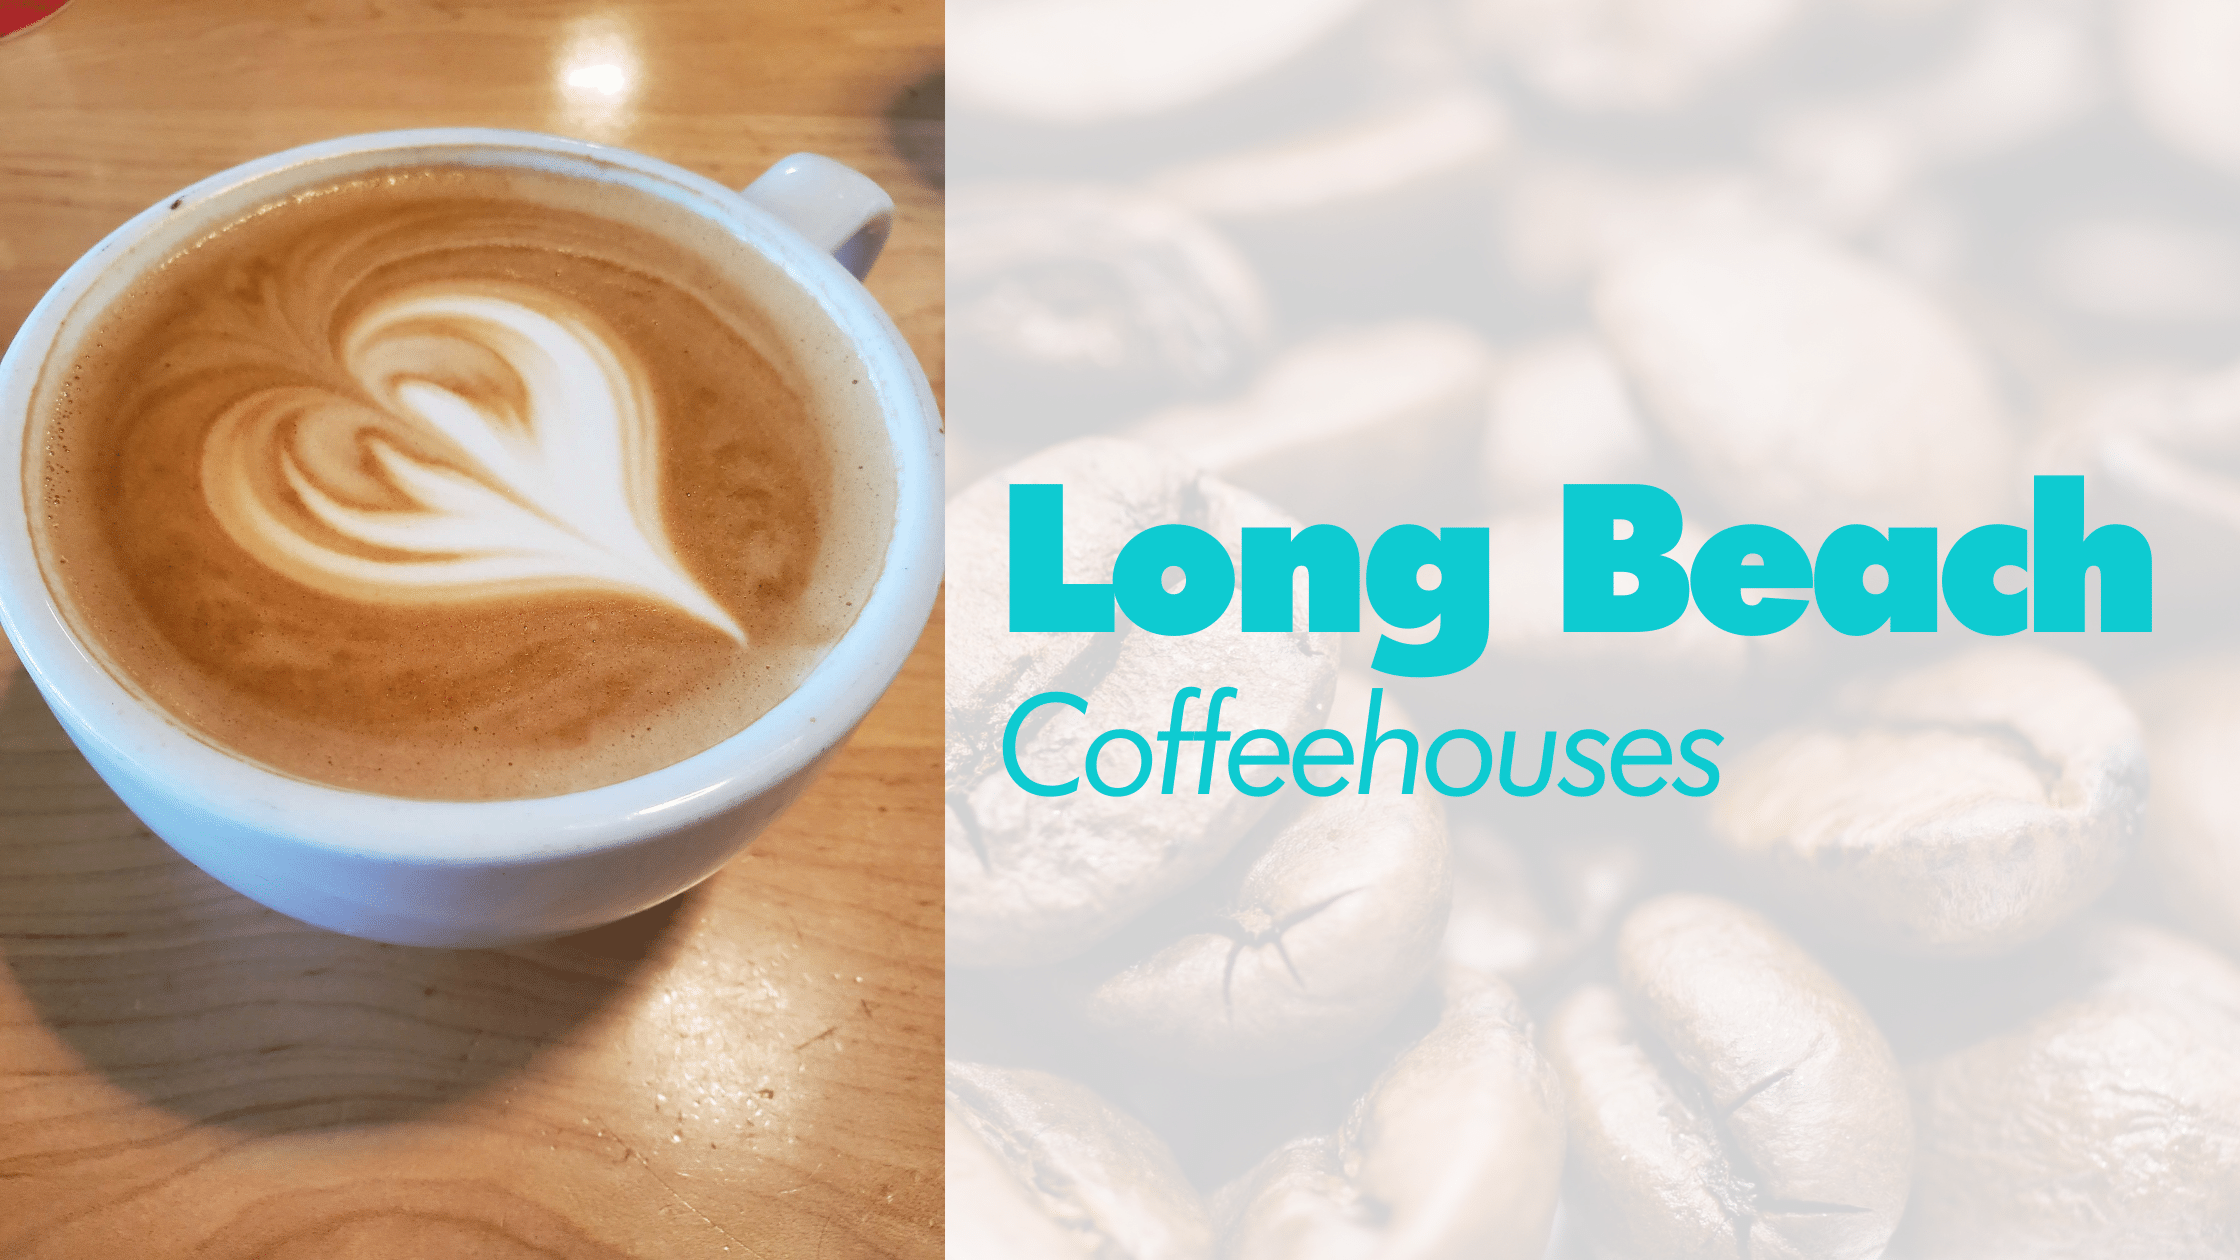 Long Beach Coffeehouses